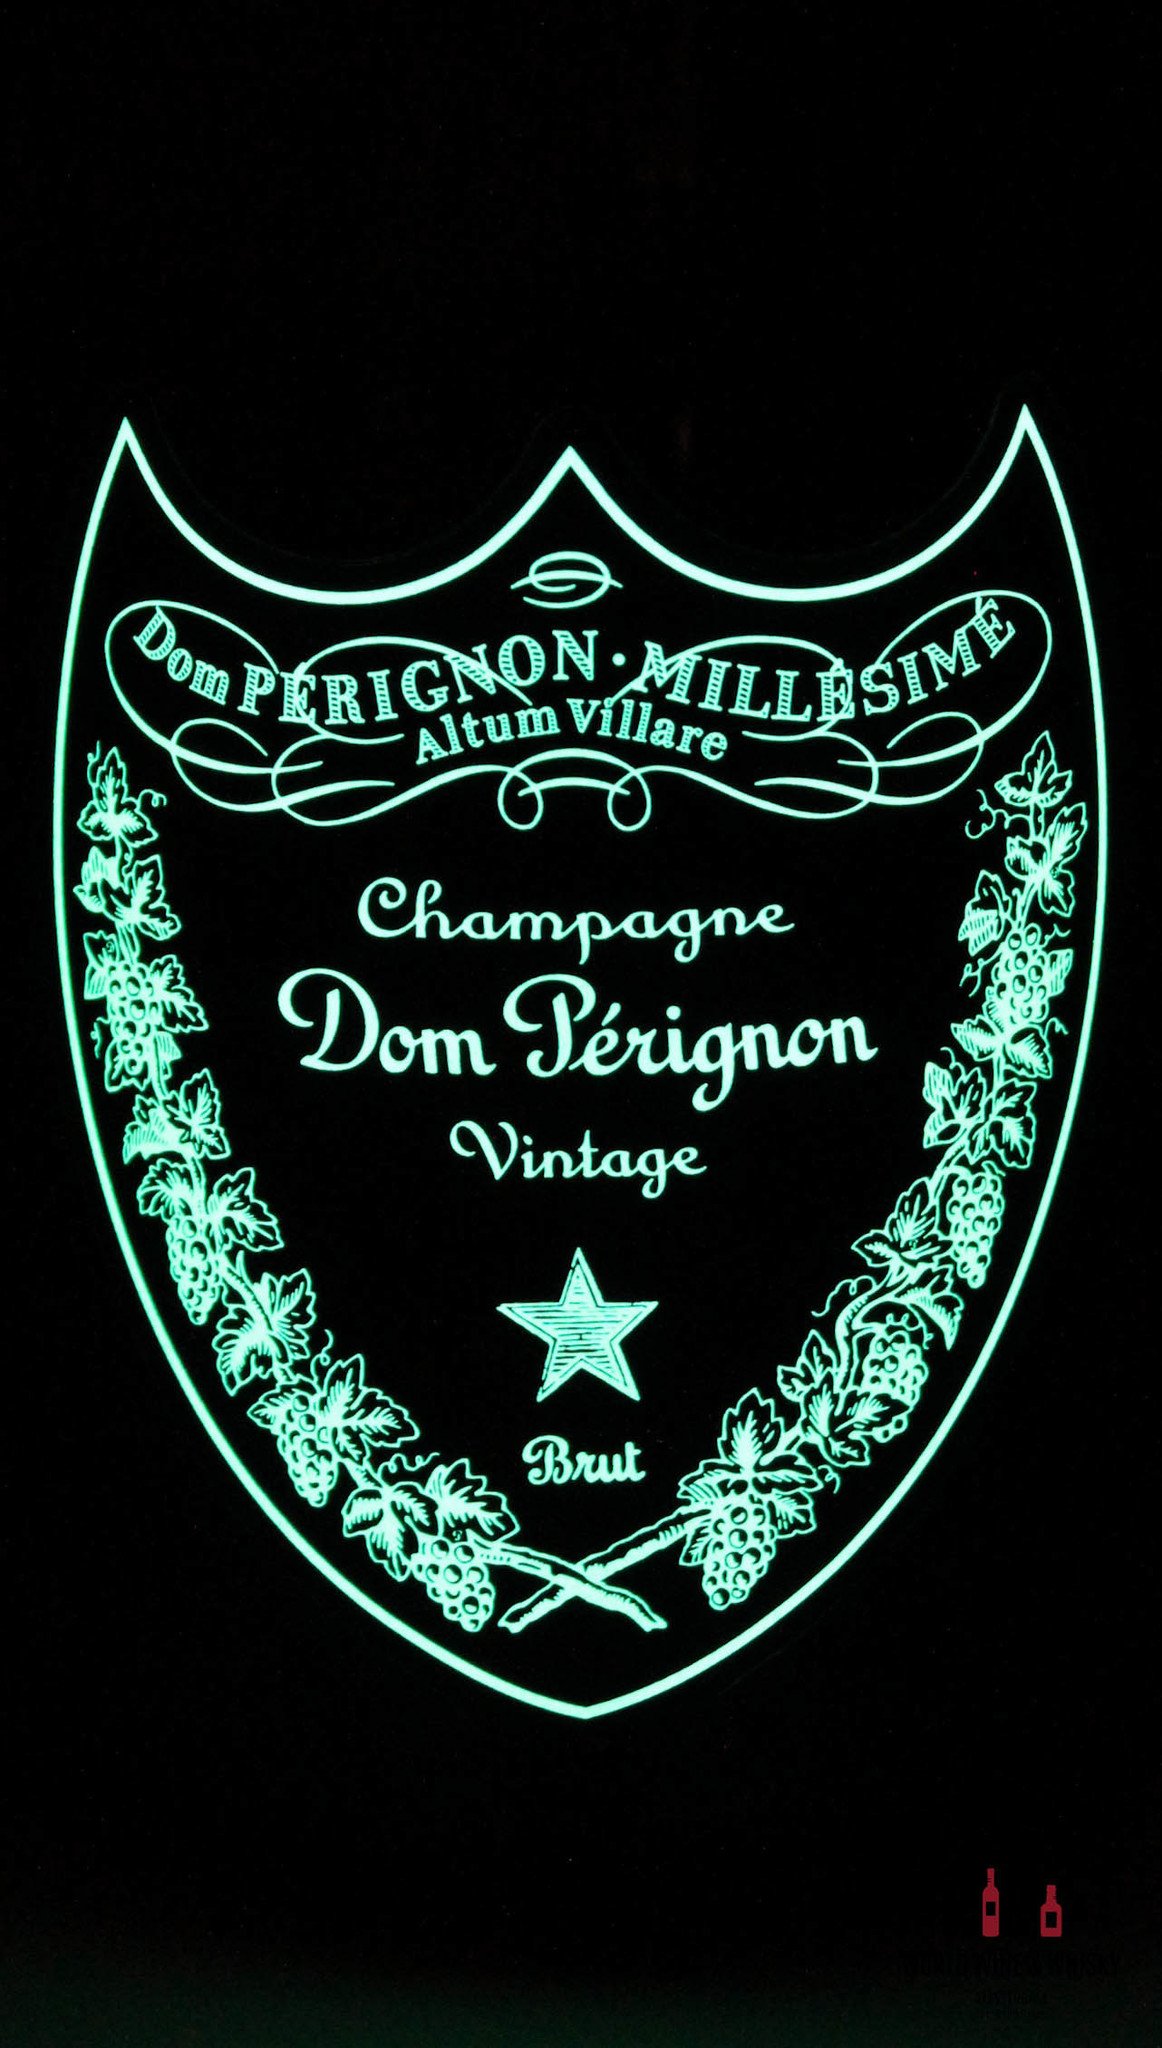 Dom Perignon Dom Perignon 2009 Luminous Champagne Vintage Brut (LED Light)